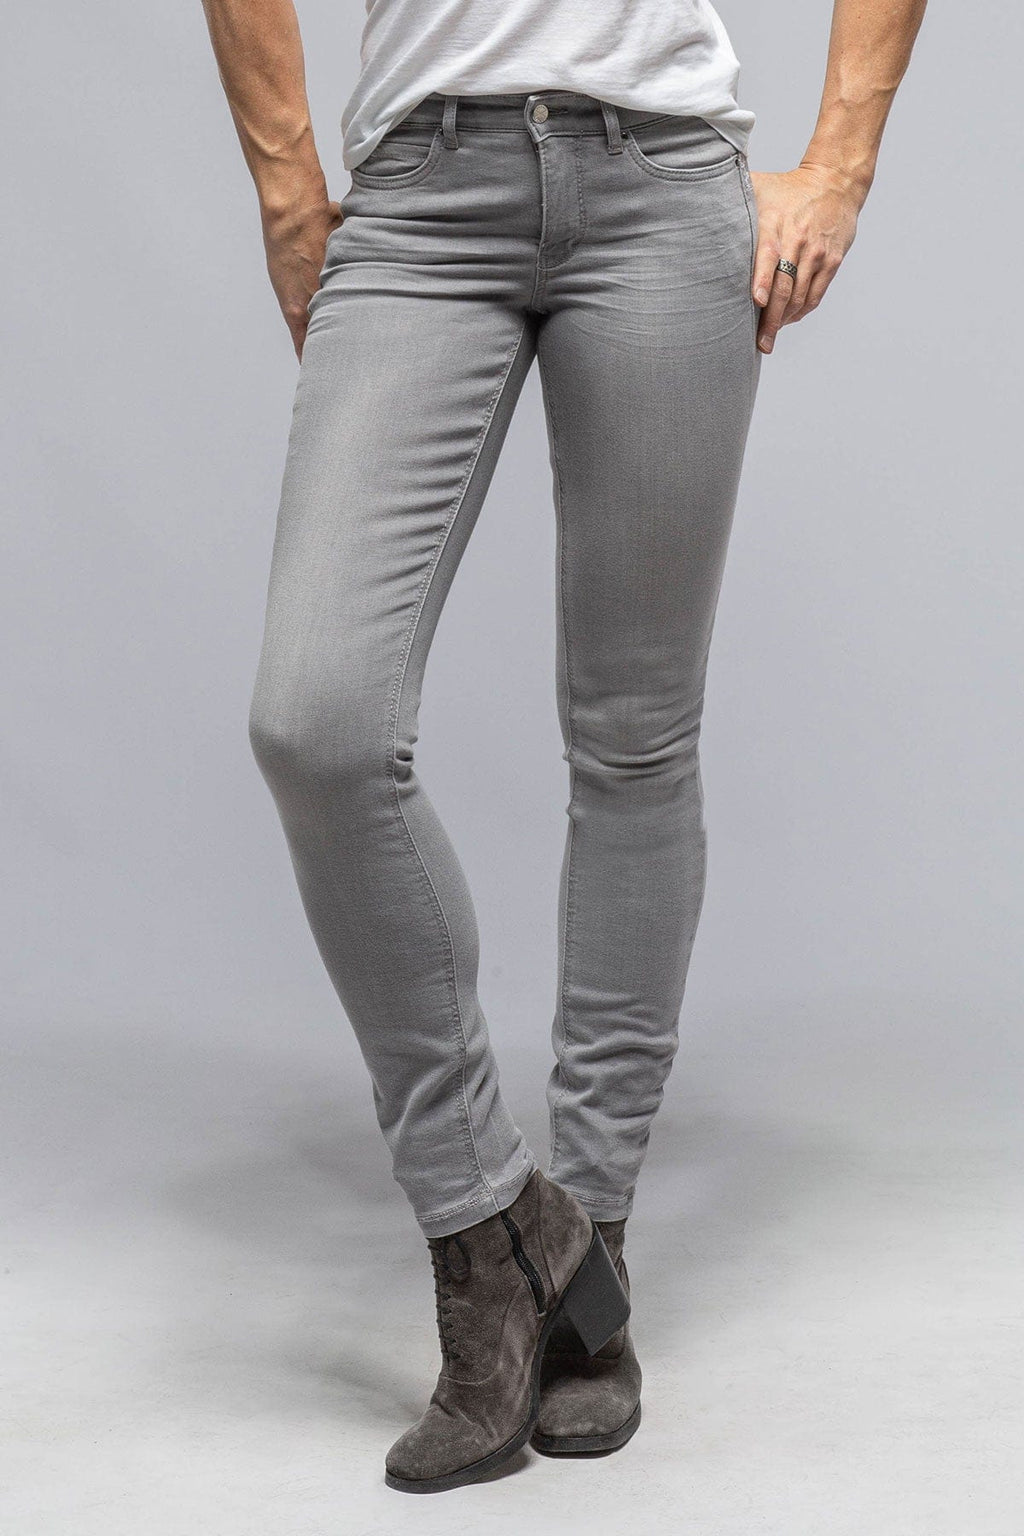 Sow pegefinger sofa Mac Jeans MAC Dream Skinny in Upcoming Grey | Axel's of Vail